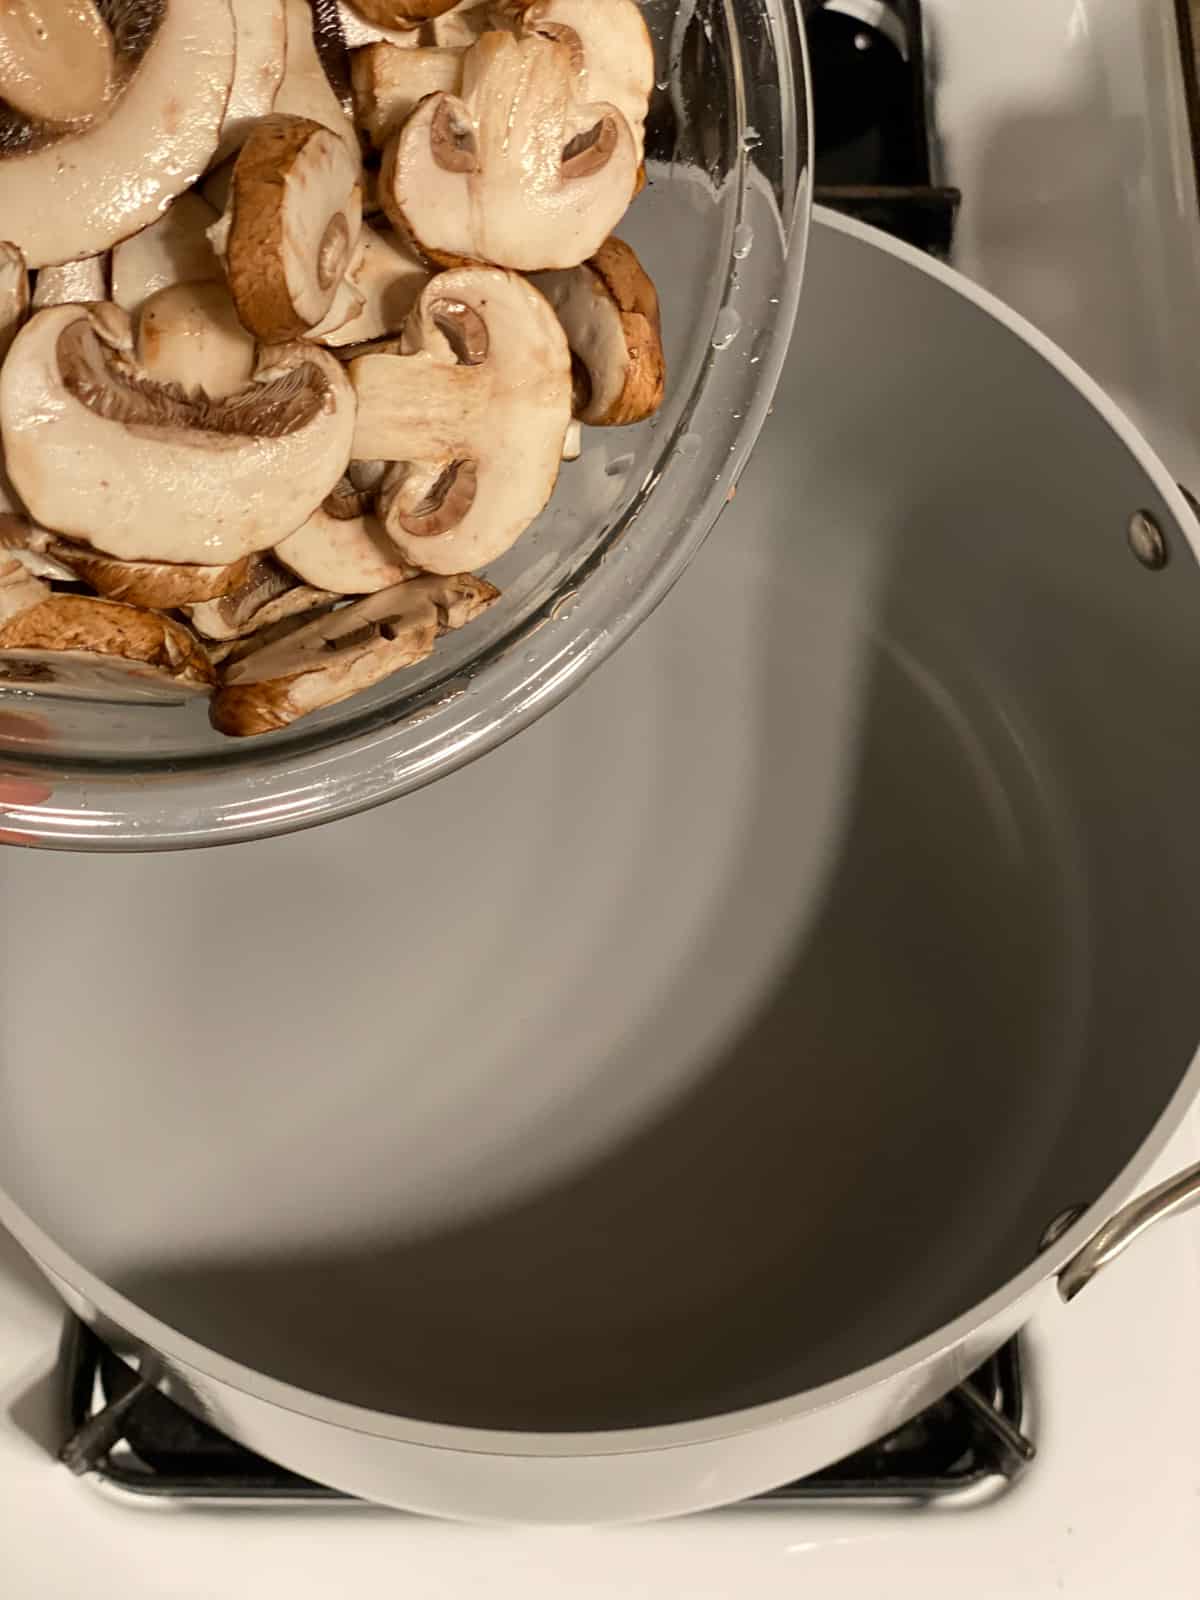 process s،t of adding mushrooms to pan